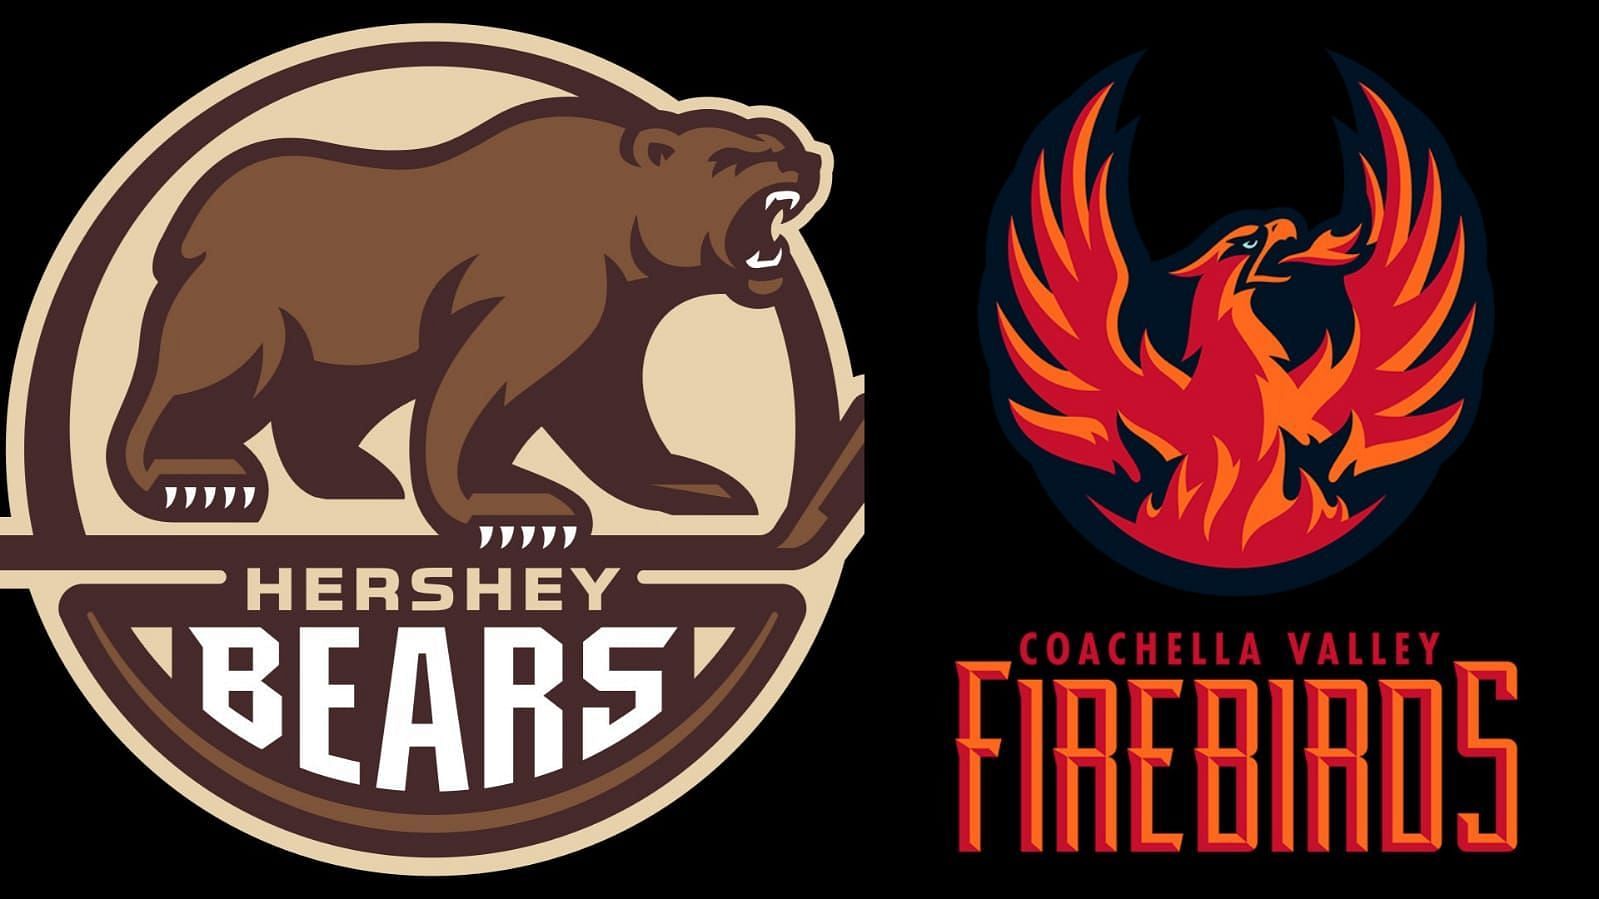 Hershey Bears vs Coachella Valley Firebirds Game 4 Preview